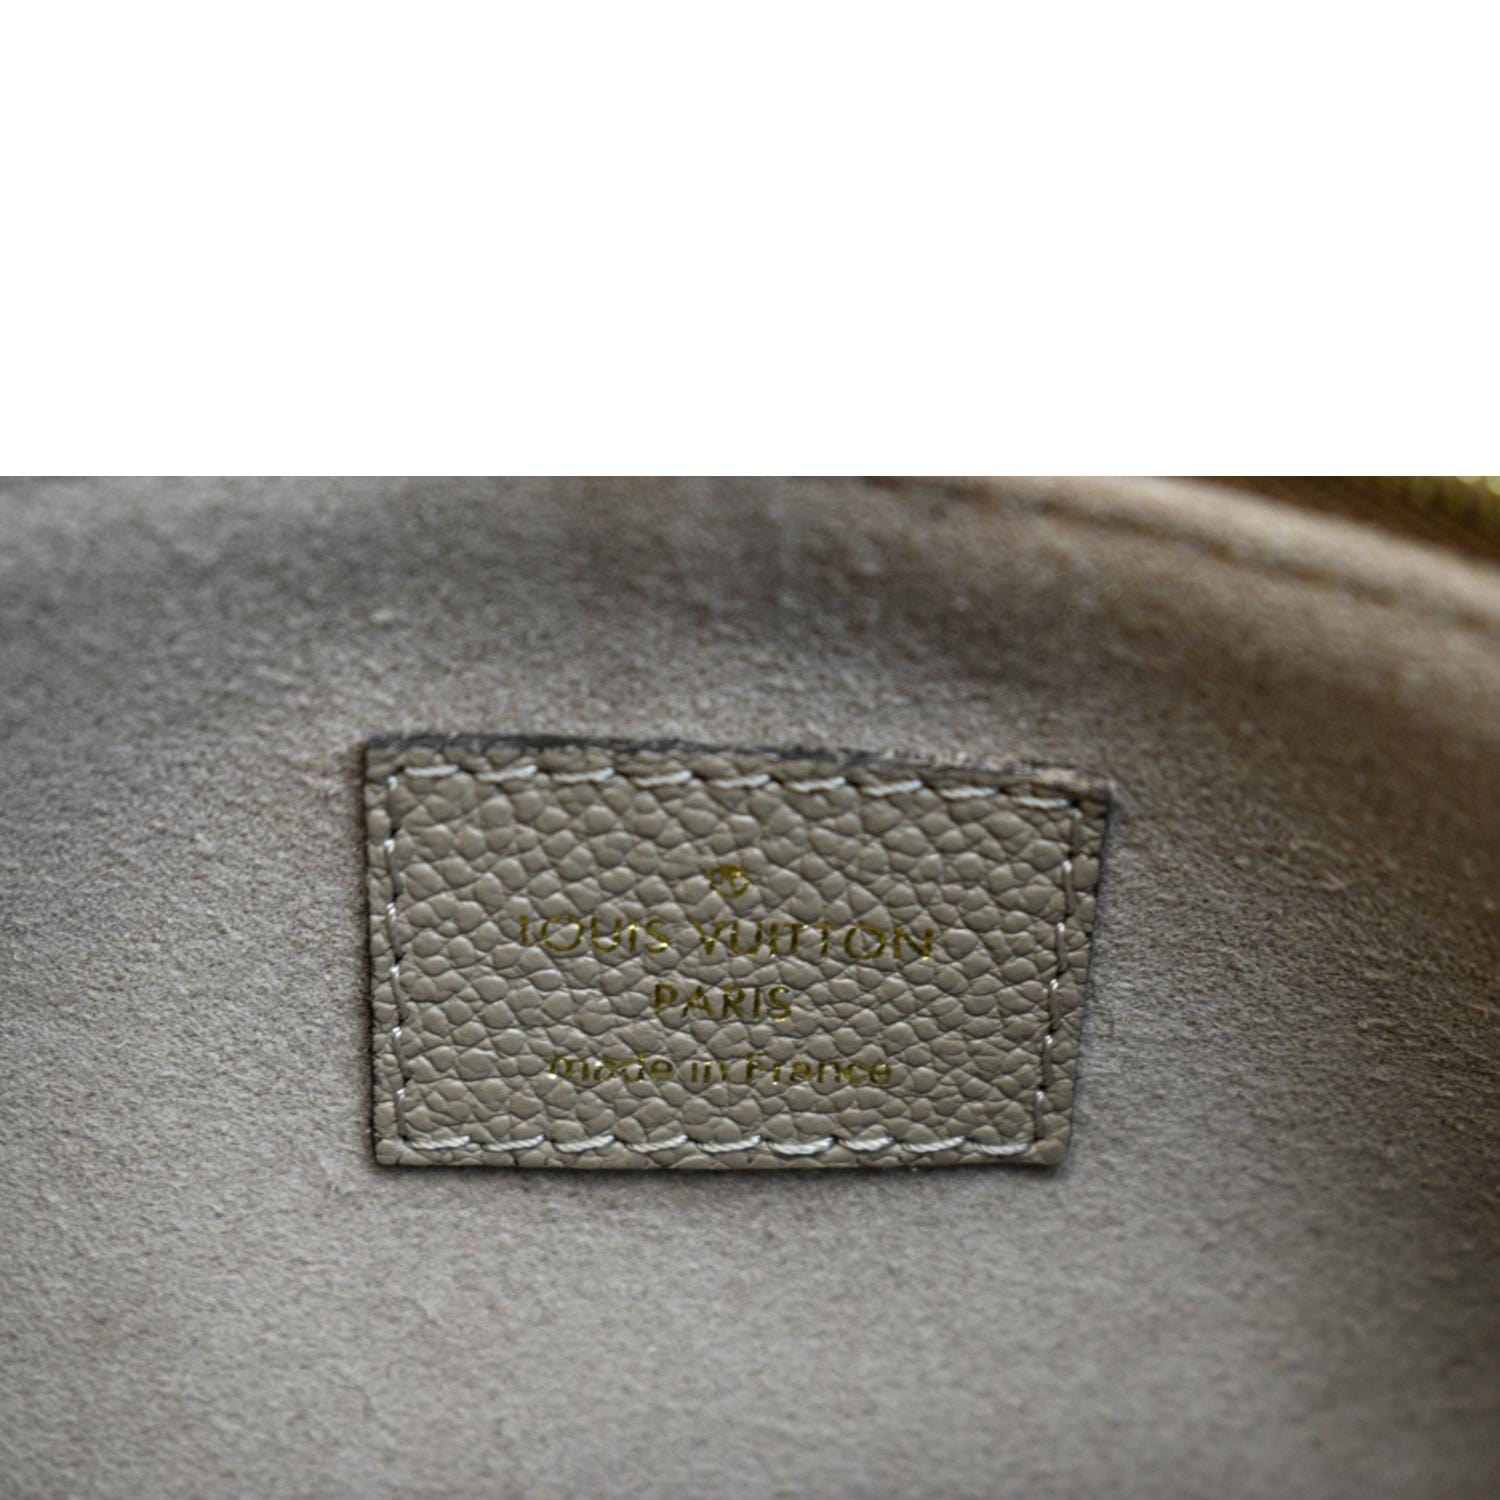 Louis Vuitton Belts for Women  Black Friday Sale & Deals up to 28